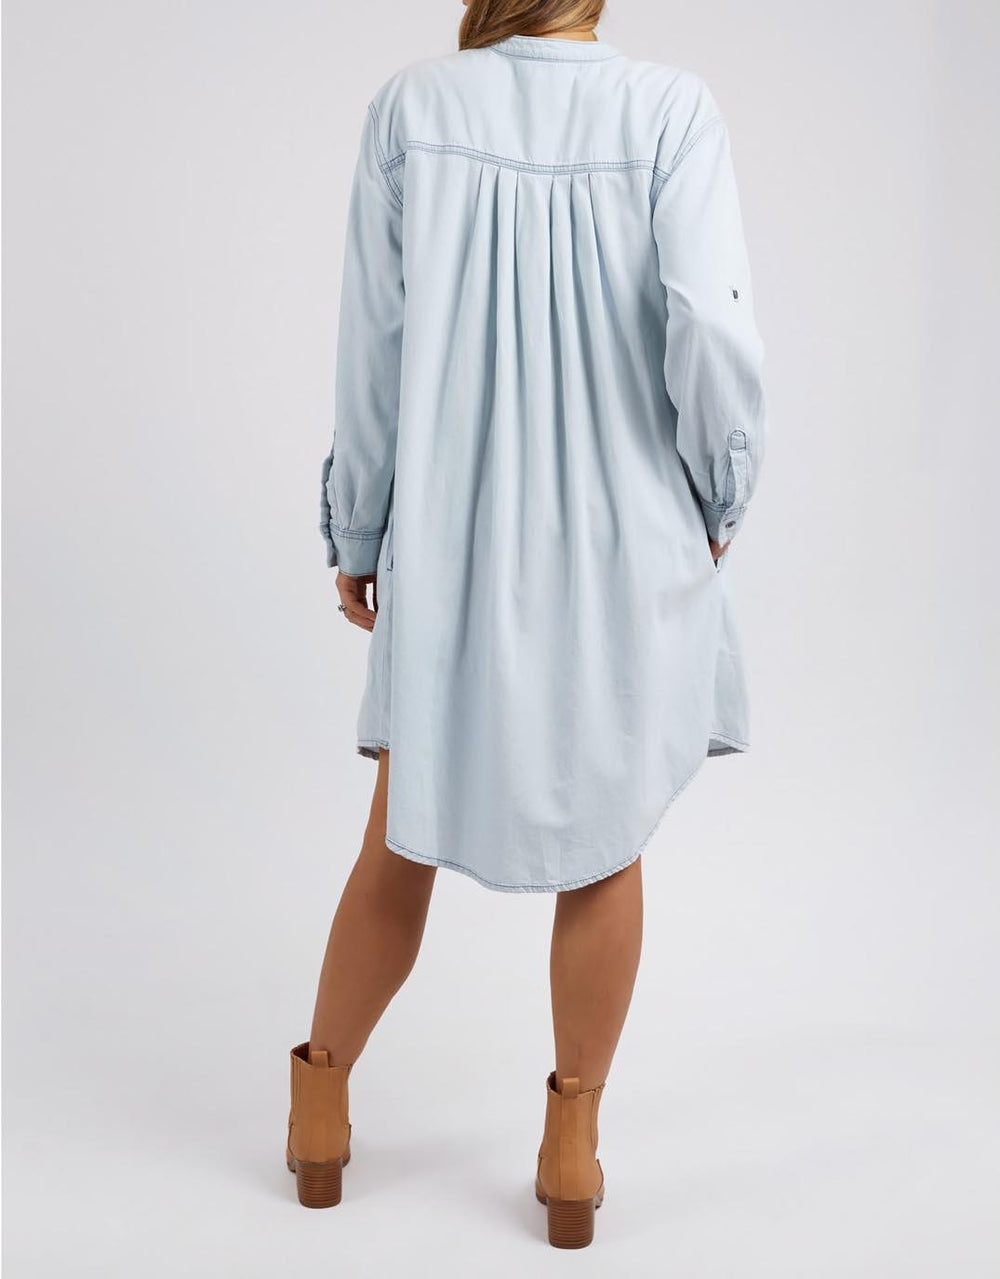 Foxwood - Micha Dress - Light Blue Denim - White & Co Living Dresses